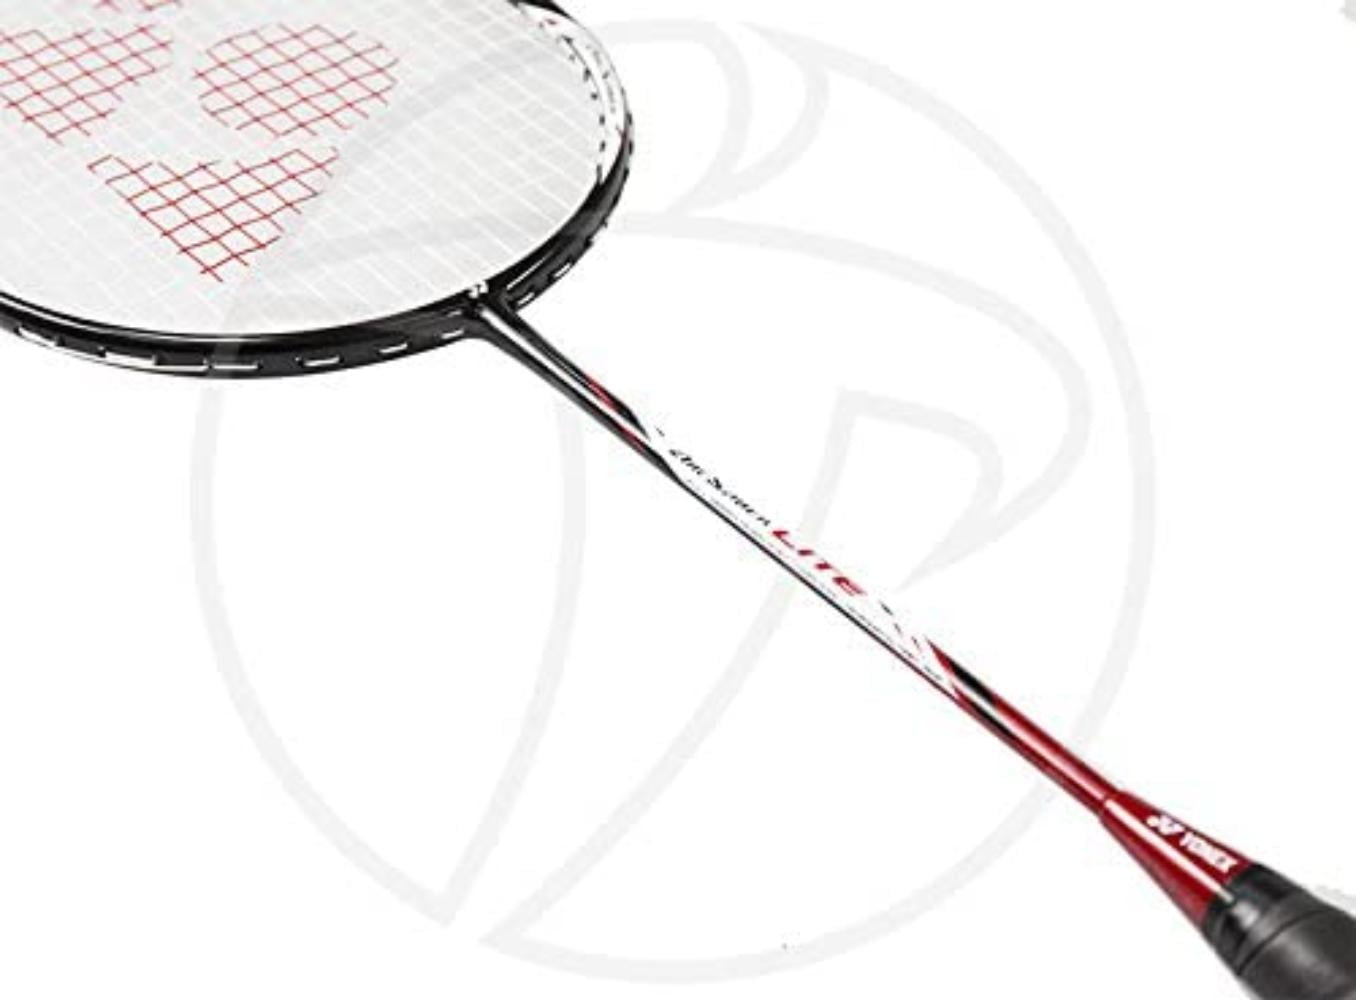 YONEX Arcsaber Lite G4/G5 Badminton Racket Red Black 